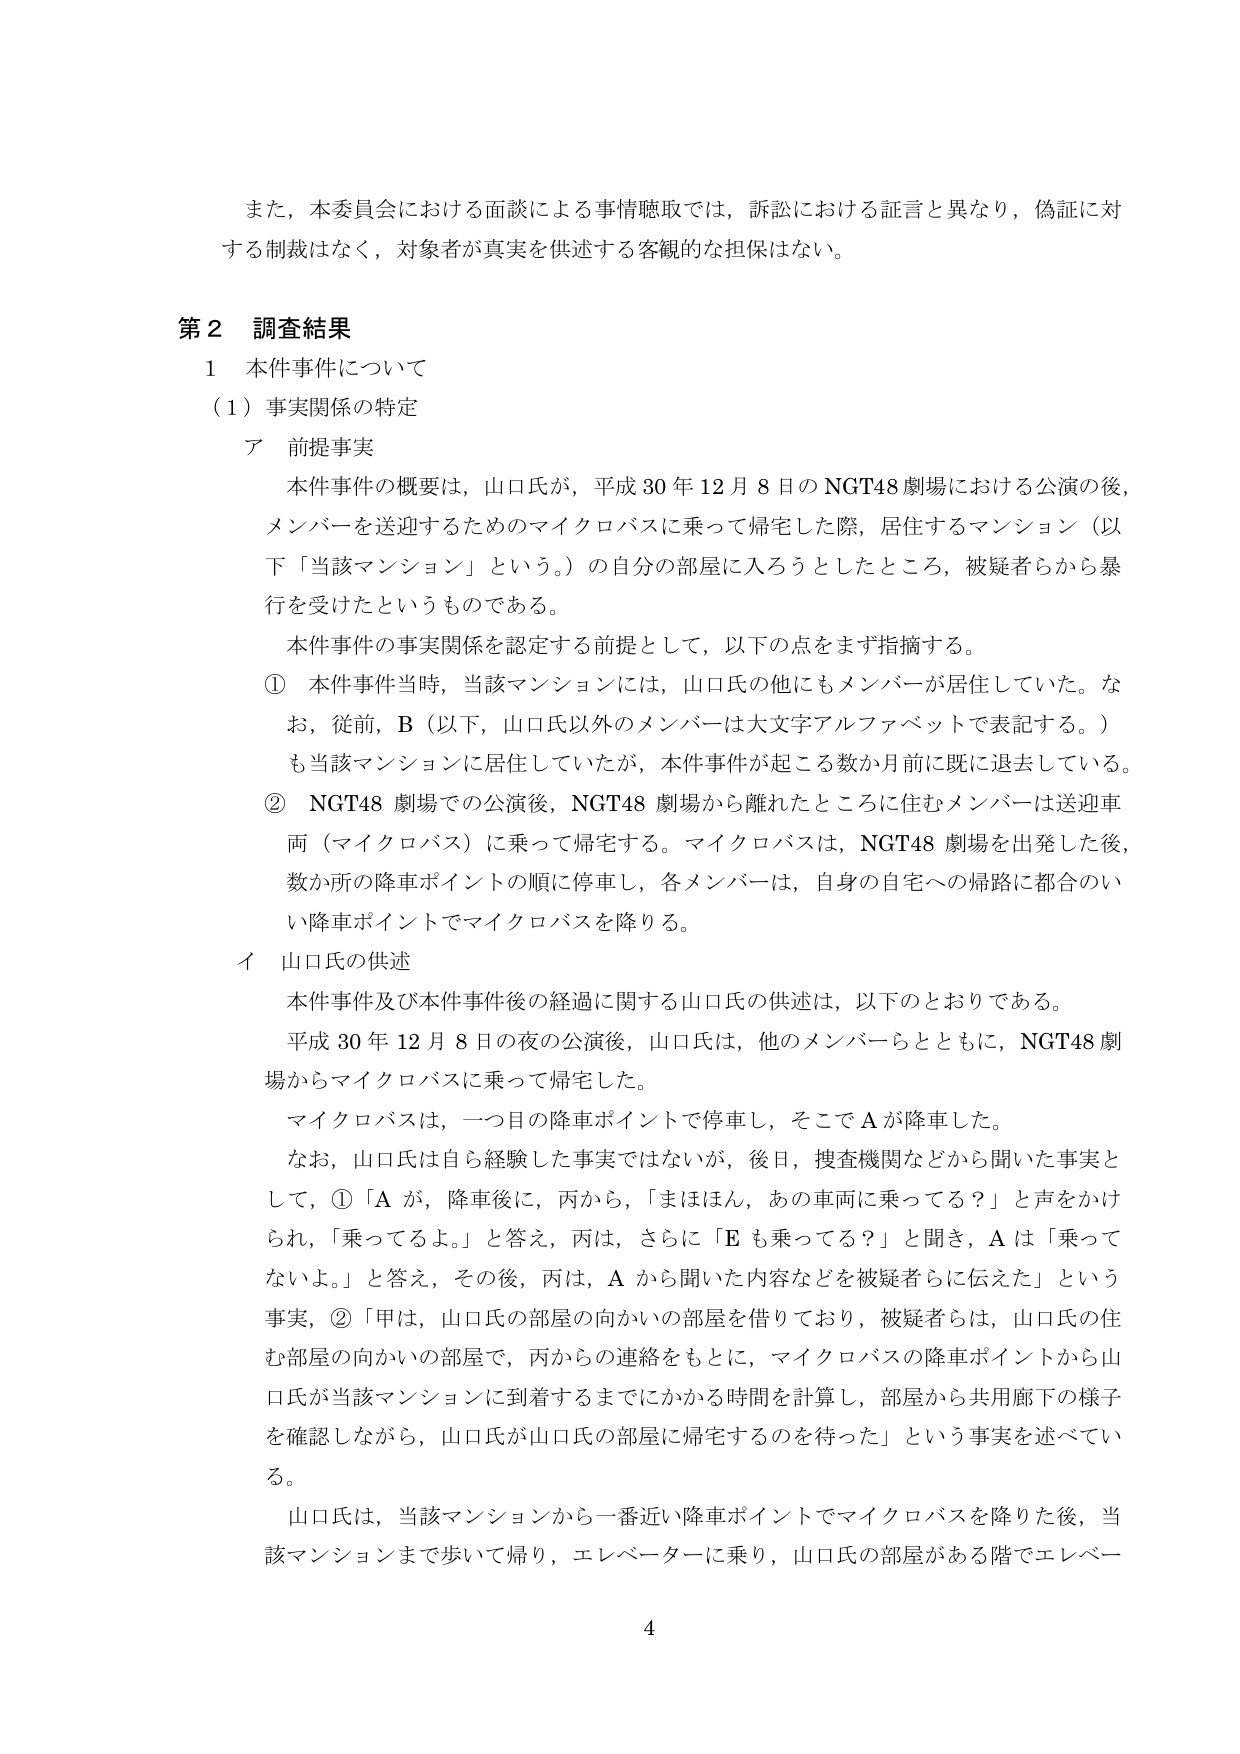 NGT48第三者委員会調査報告書06